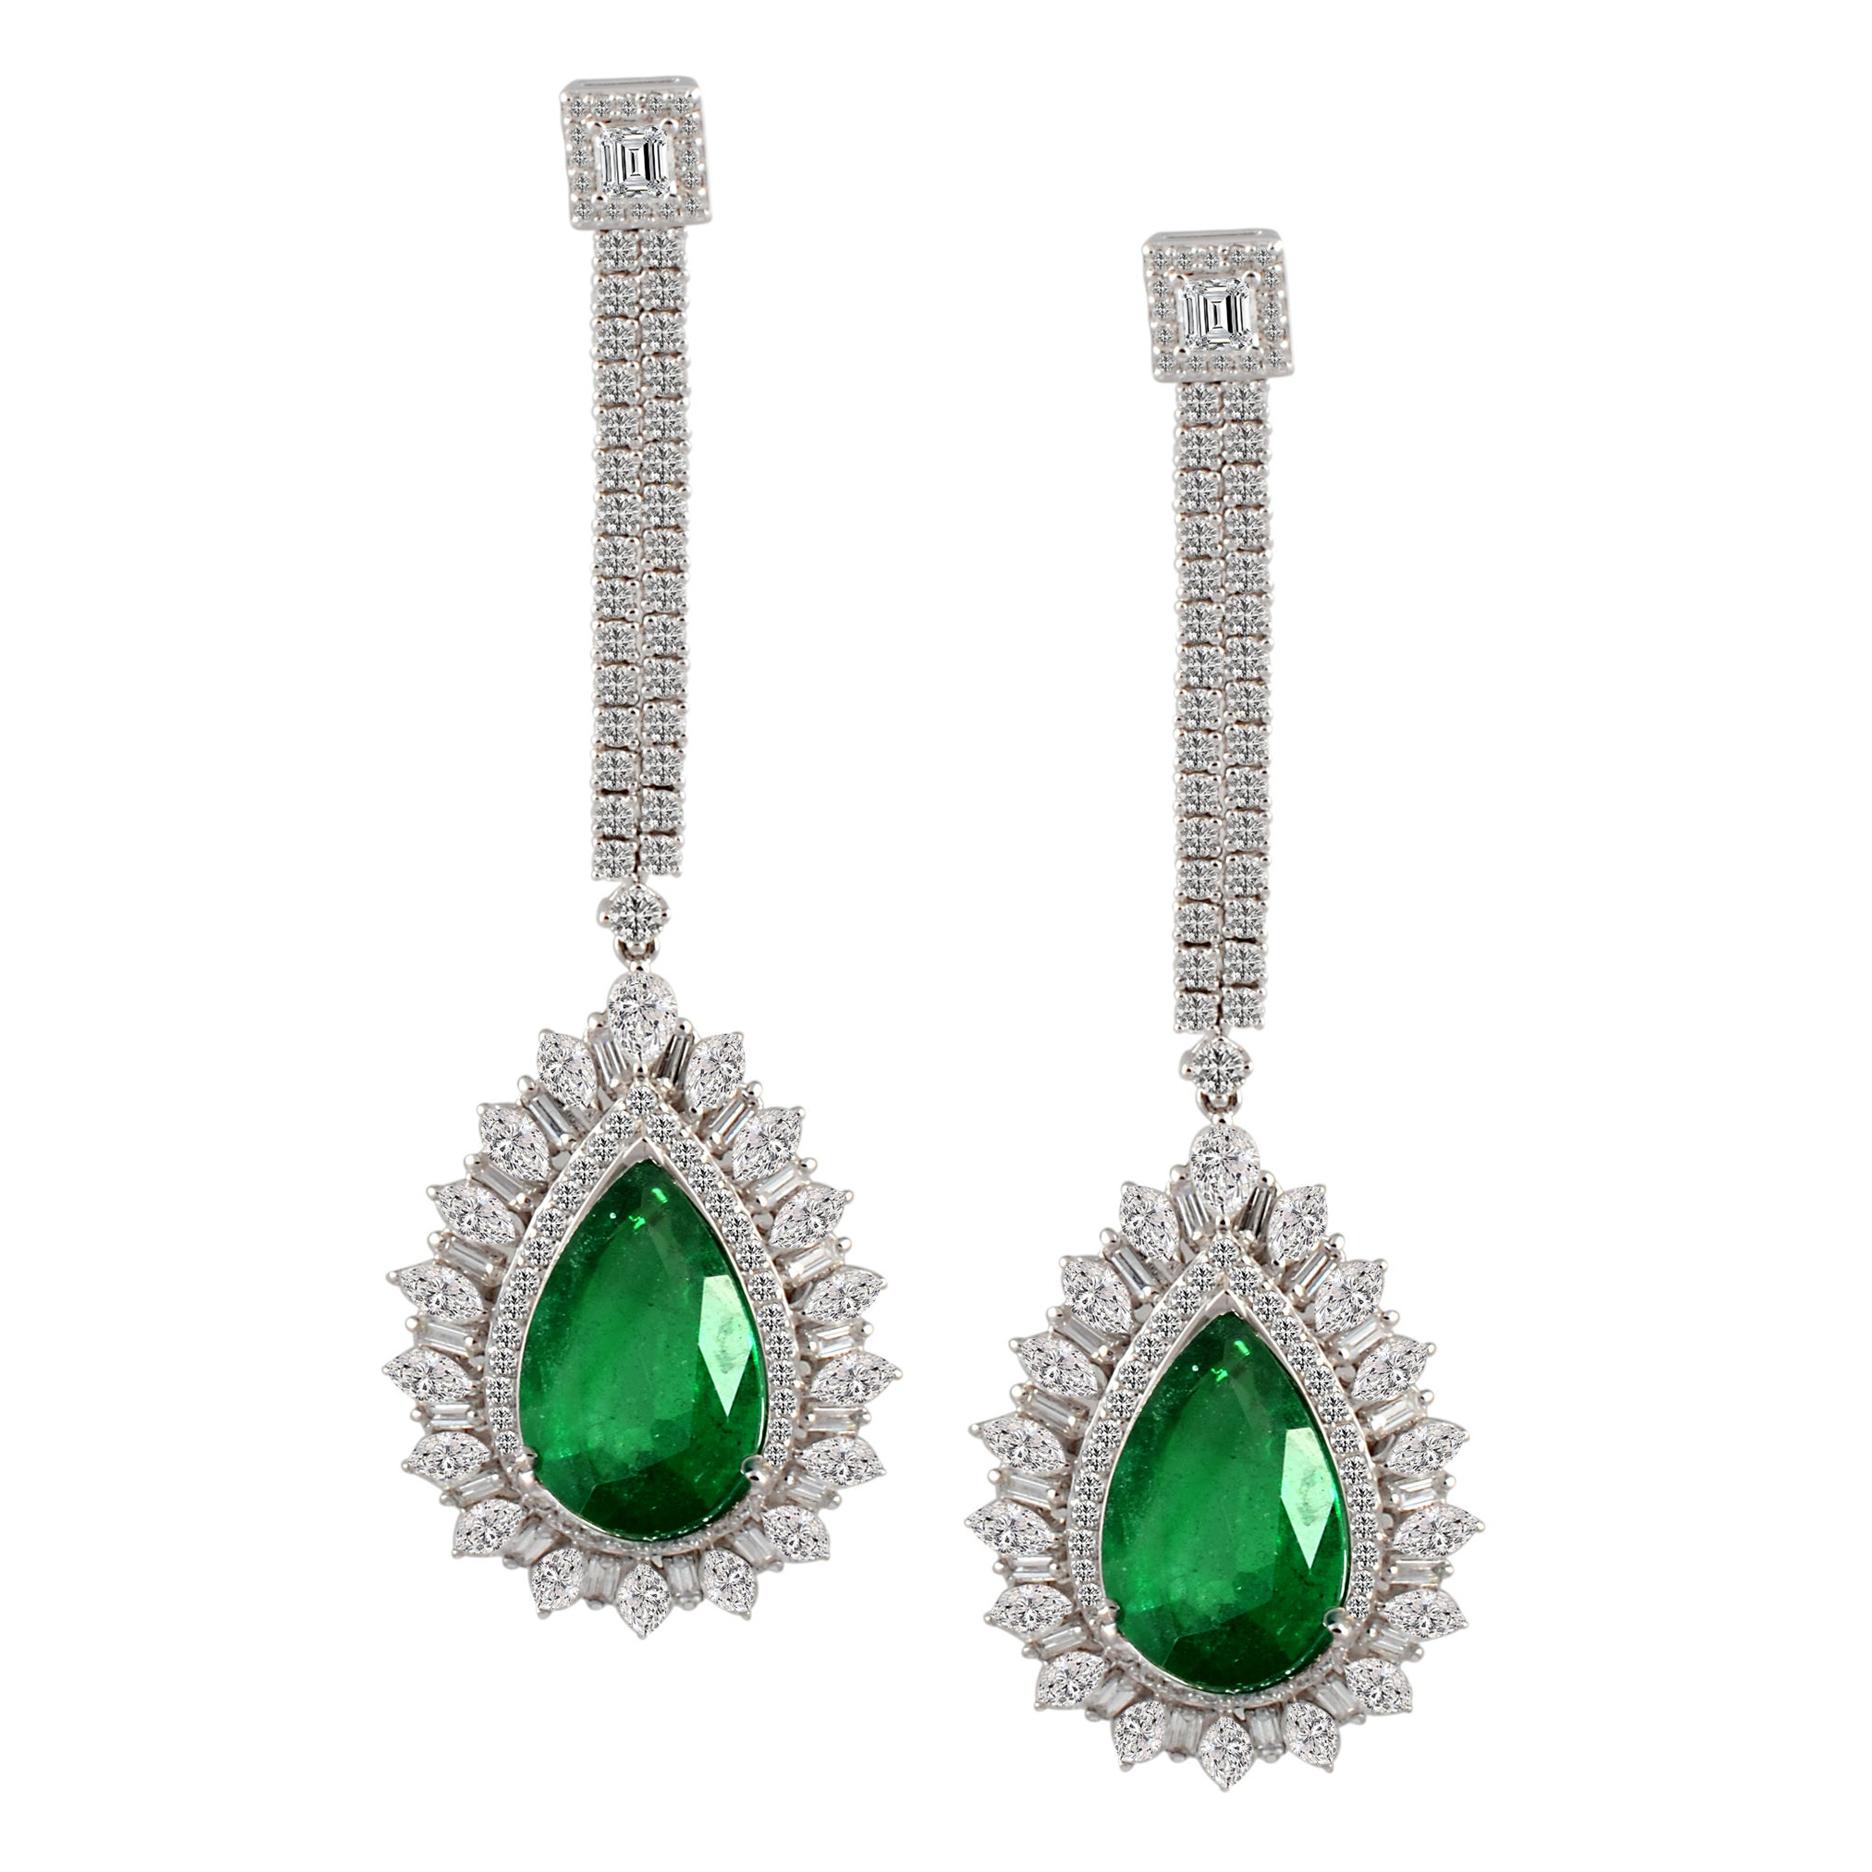 11 Ct Pear Shape Zambian Emerald & 6 Ct Diamonds Drop Earrings 18K White Gold